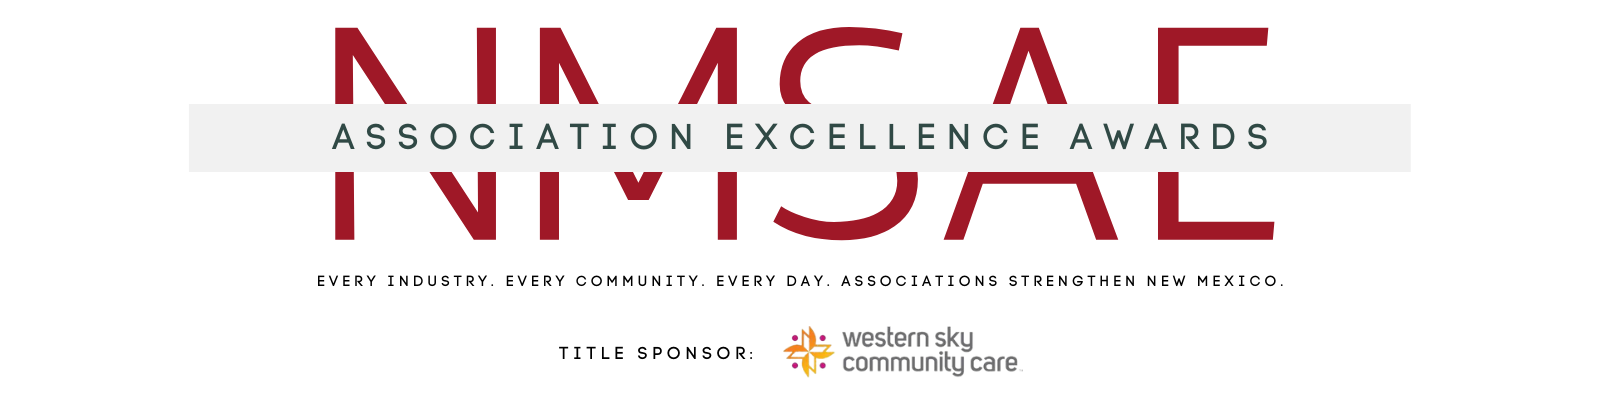 NMSAE - Association Excellence Awards Logo (Google Form Header) (2)